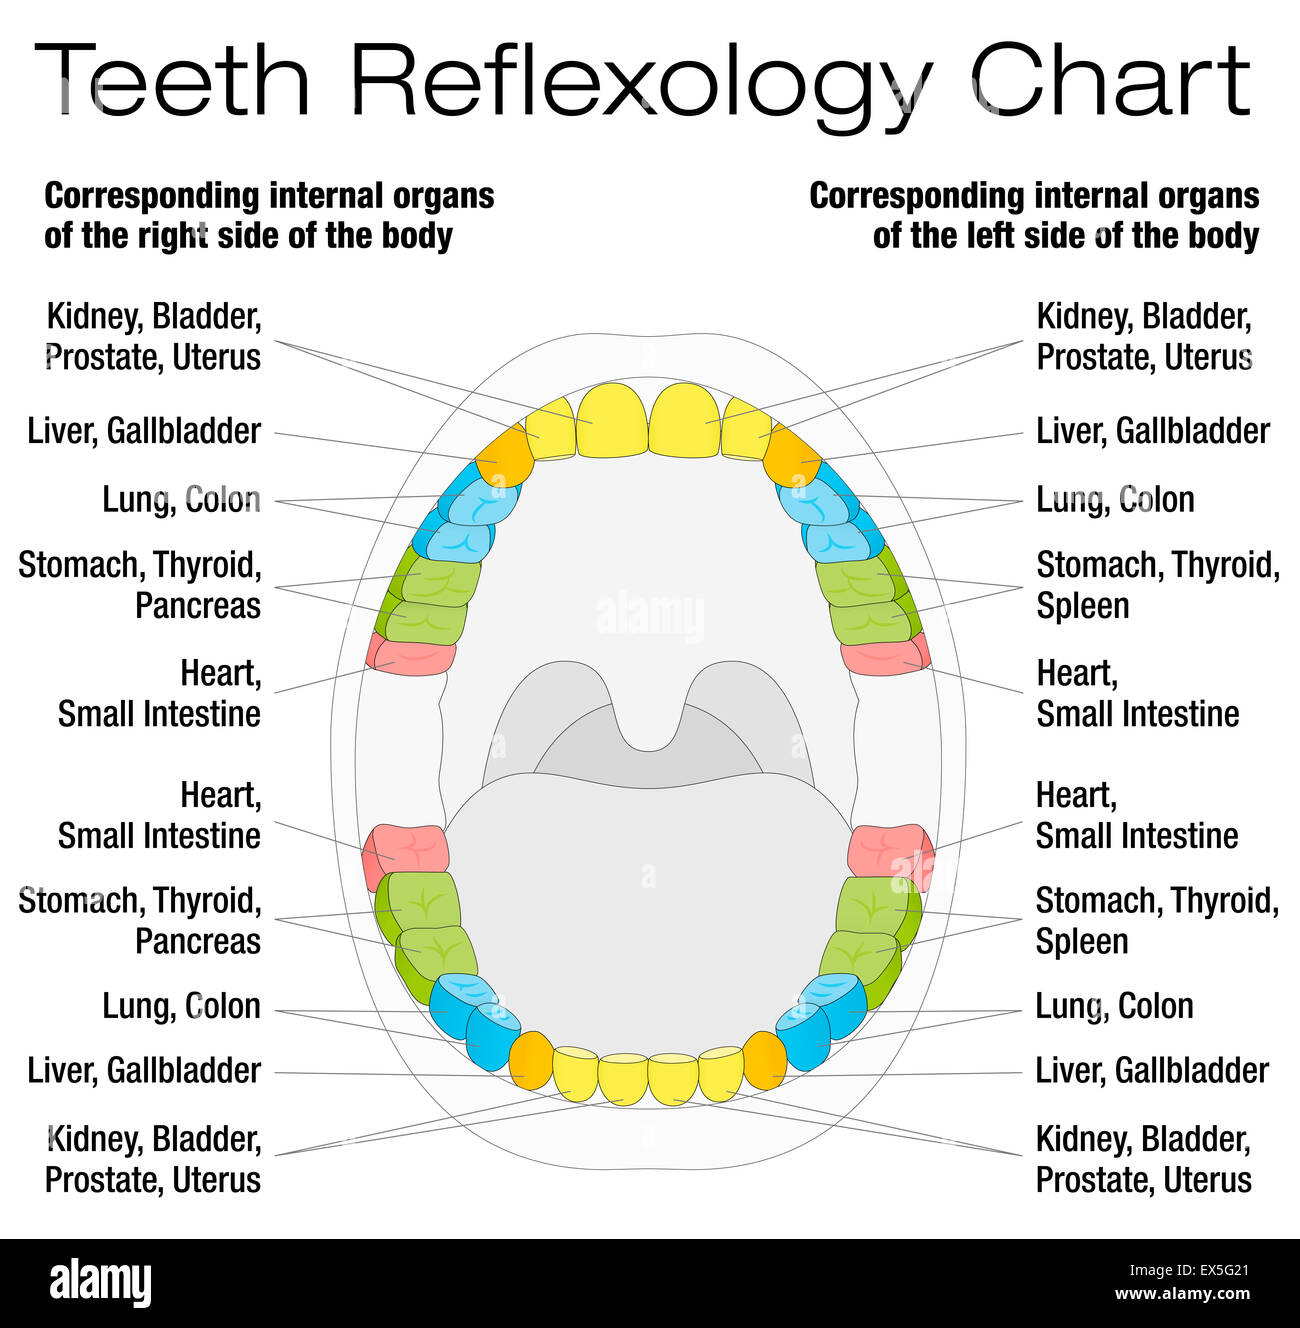 Teeth reflexology chart - permanent teeth and their ...